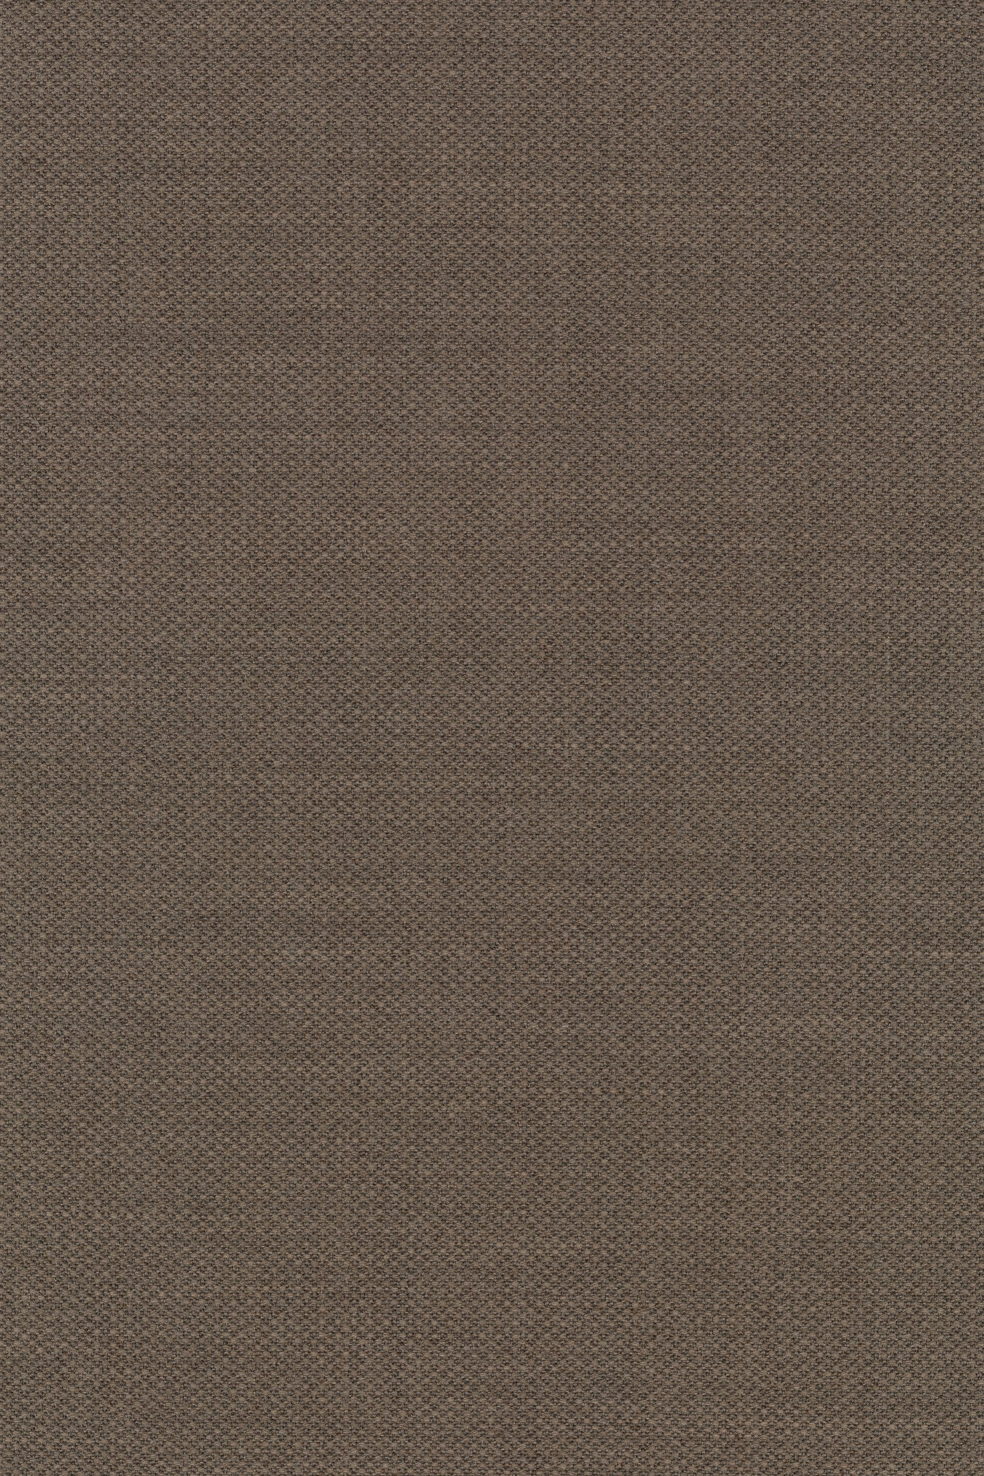 Fabric sample Fiord 271 grey